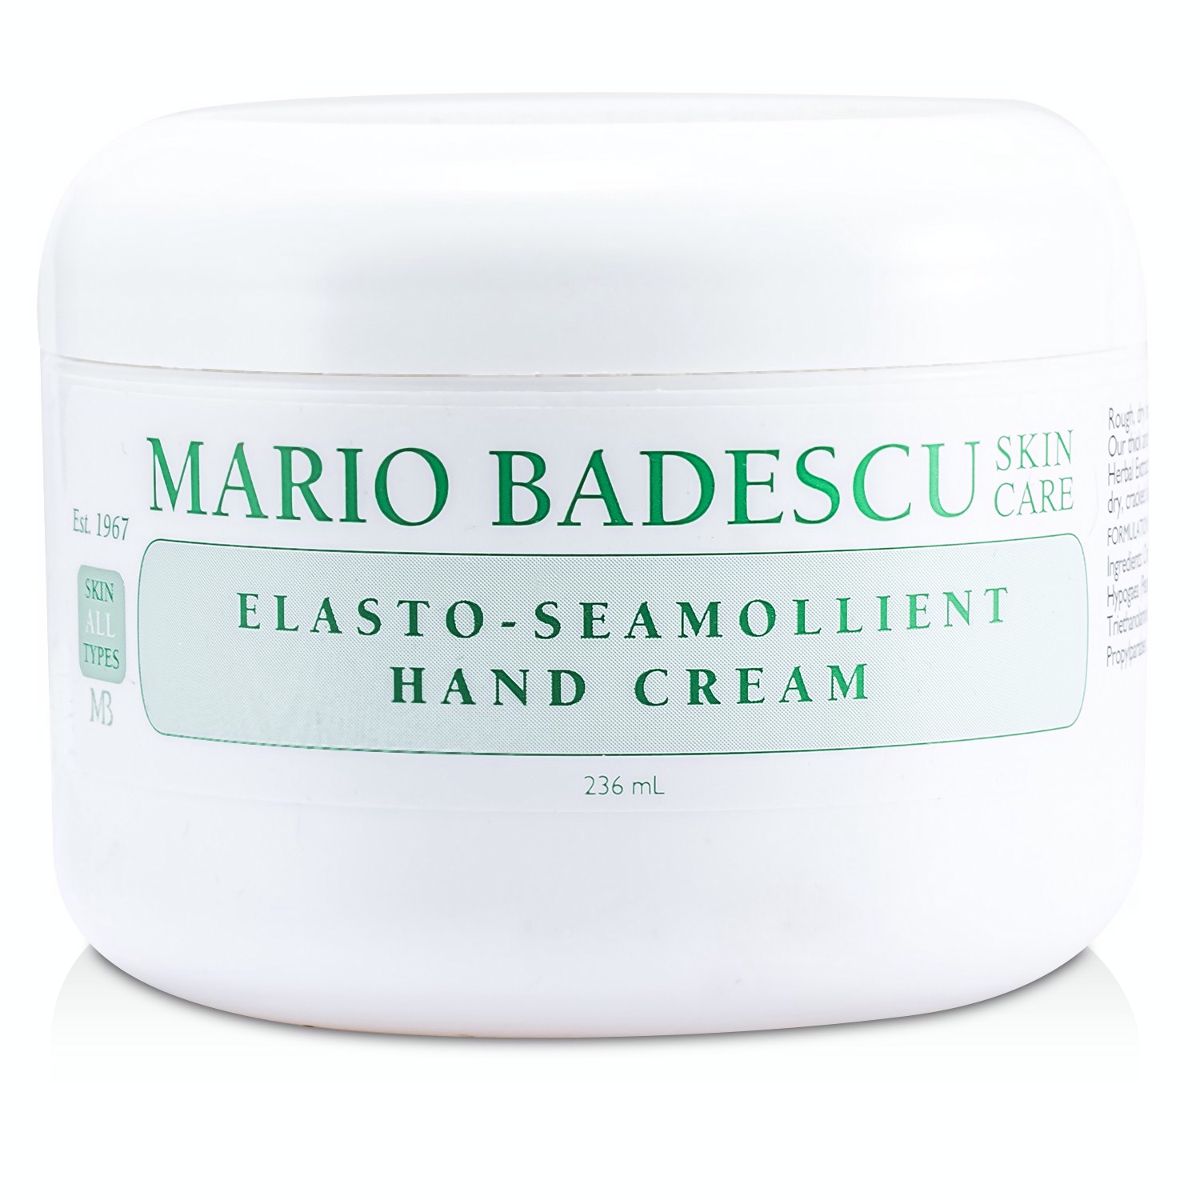 Elasto-Seamollient Hand Cream - For All Skin Types Mario Badescu Image